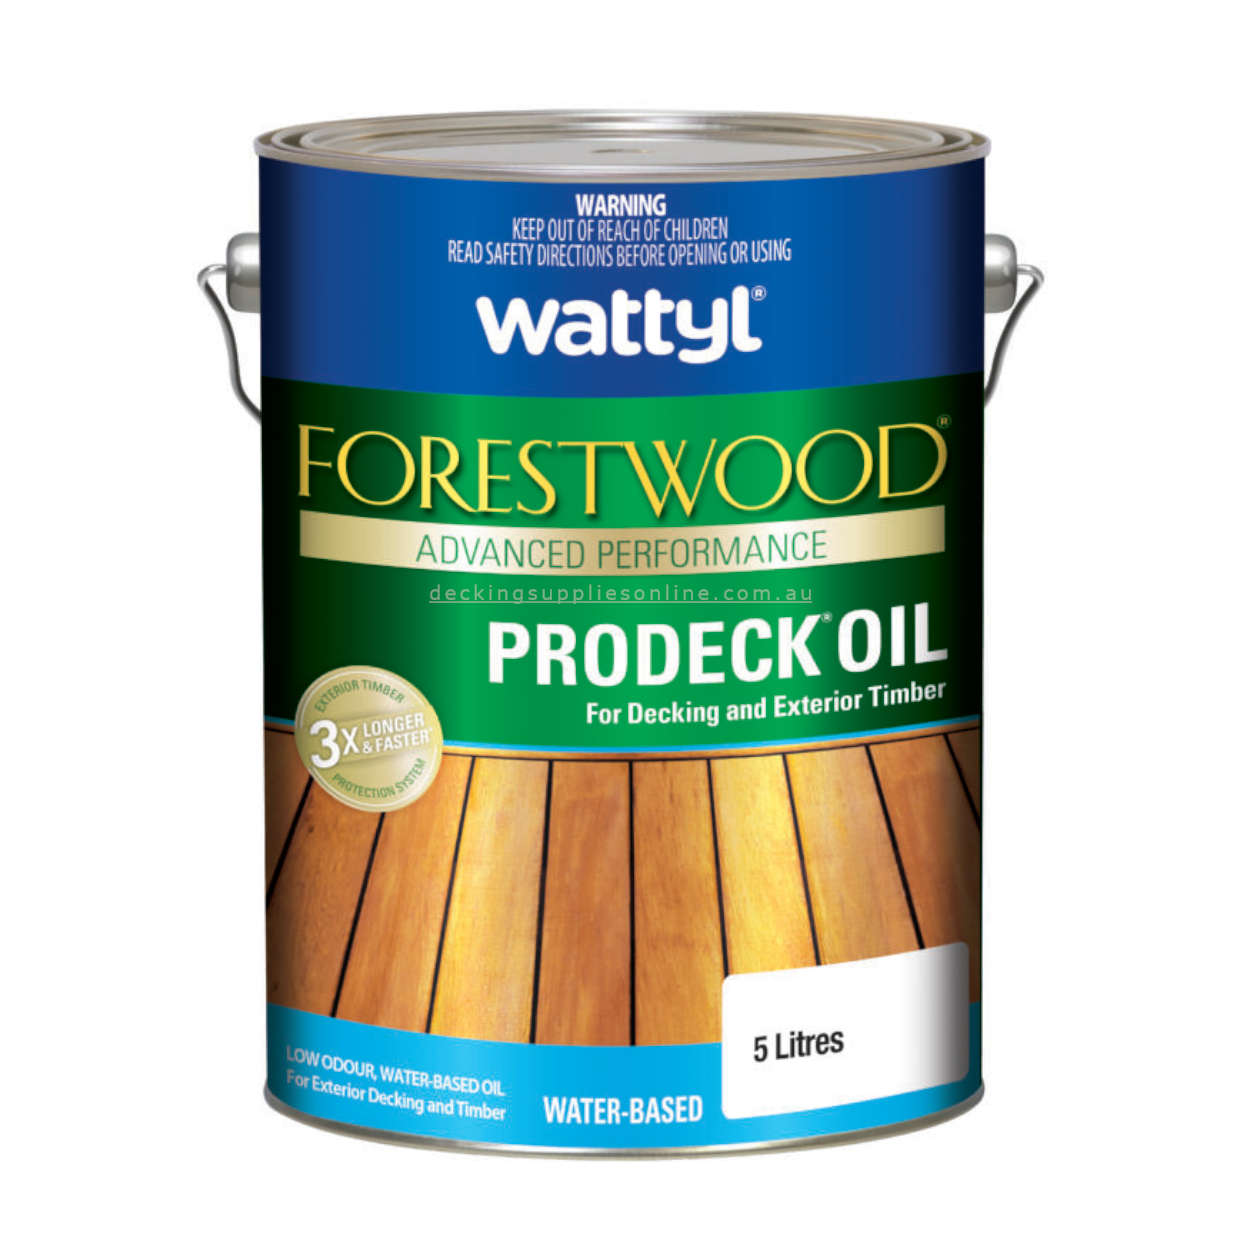 Wattyl_Forestwood_ProDeck_Oil_5_litre_Decking_Supplies_Online